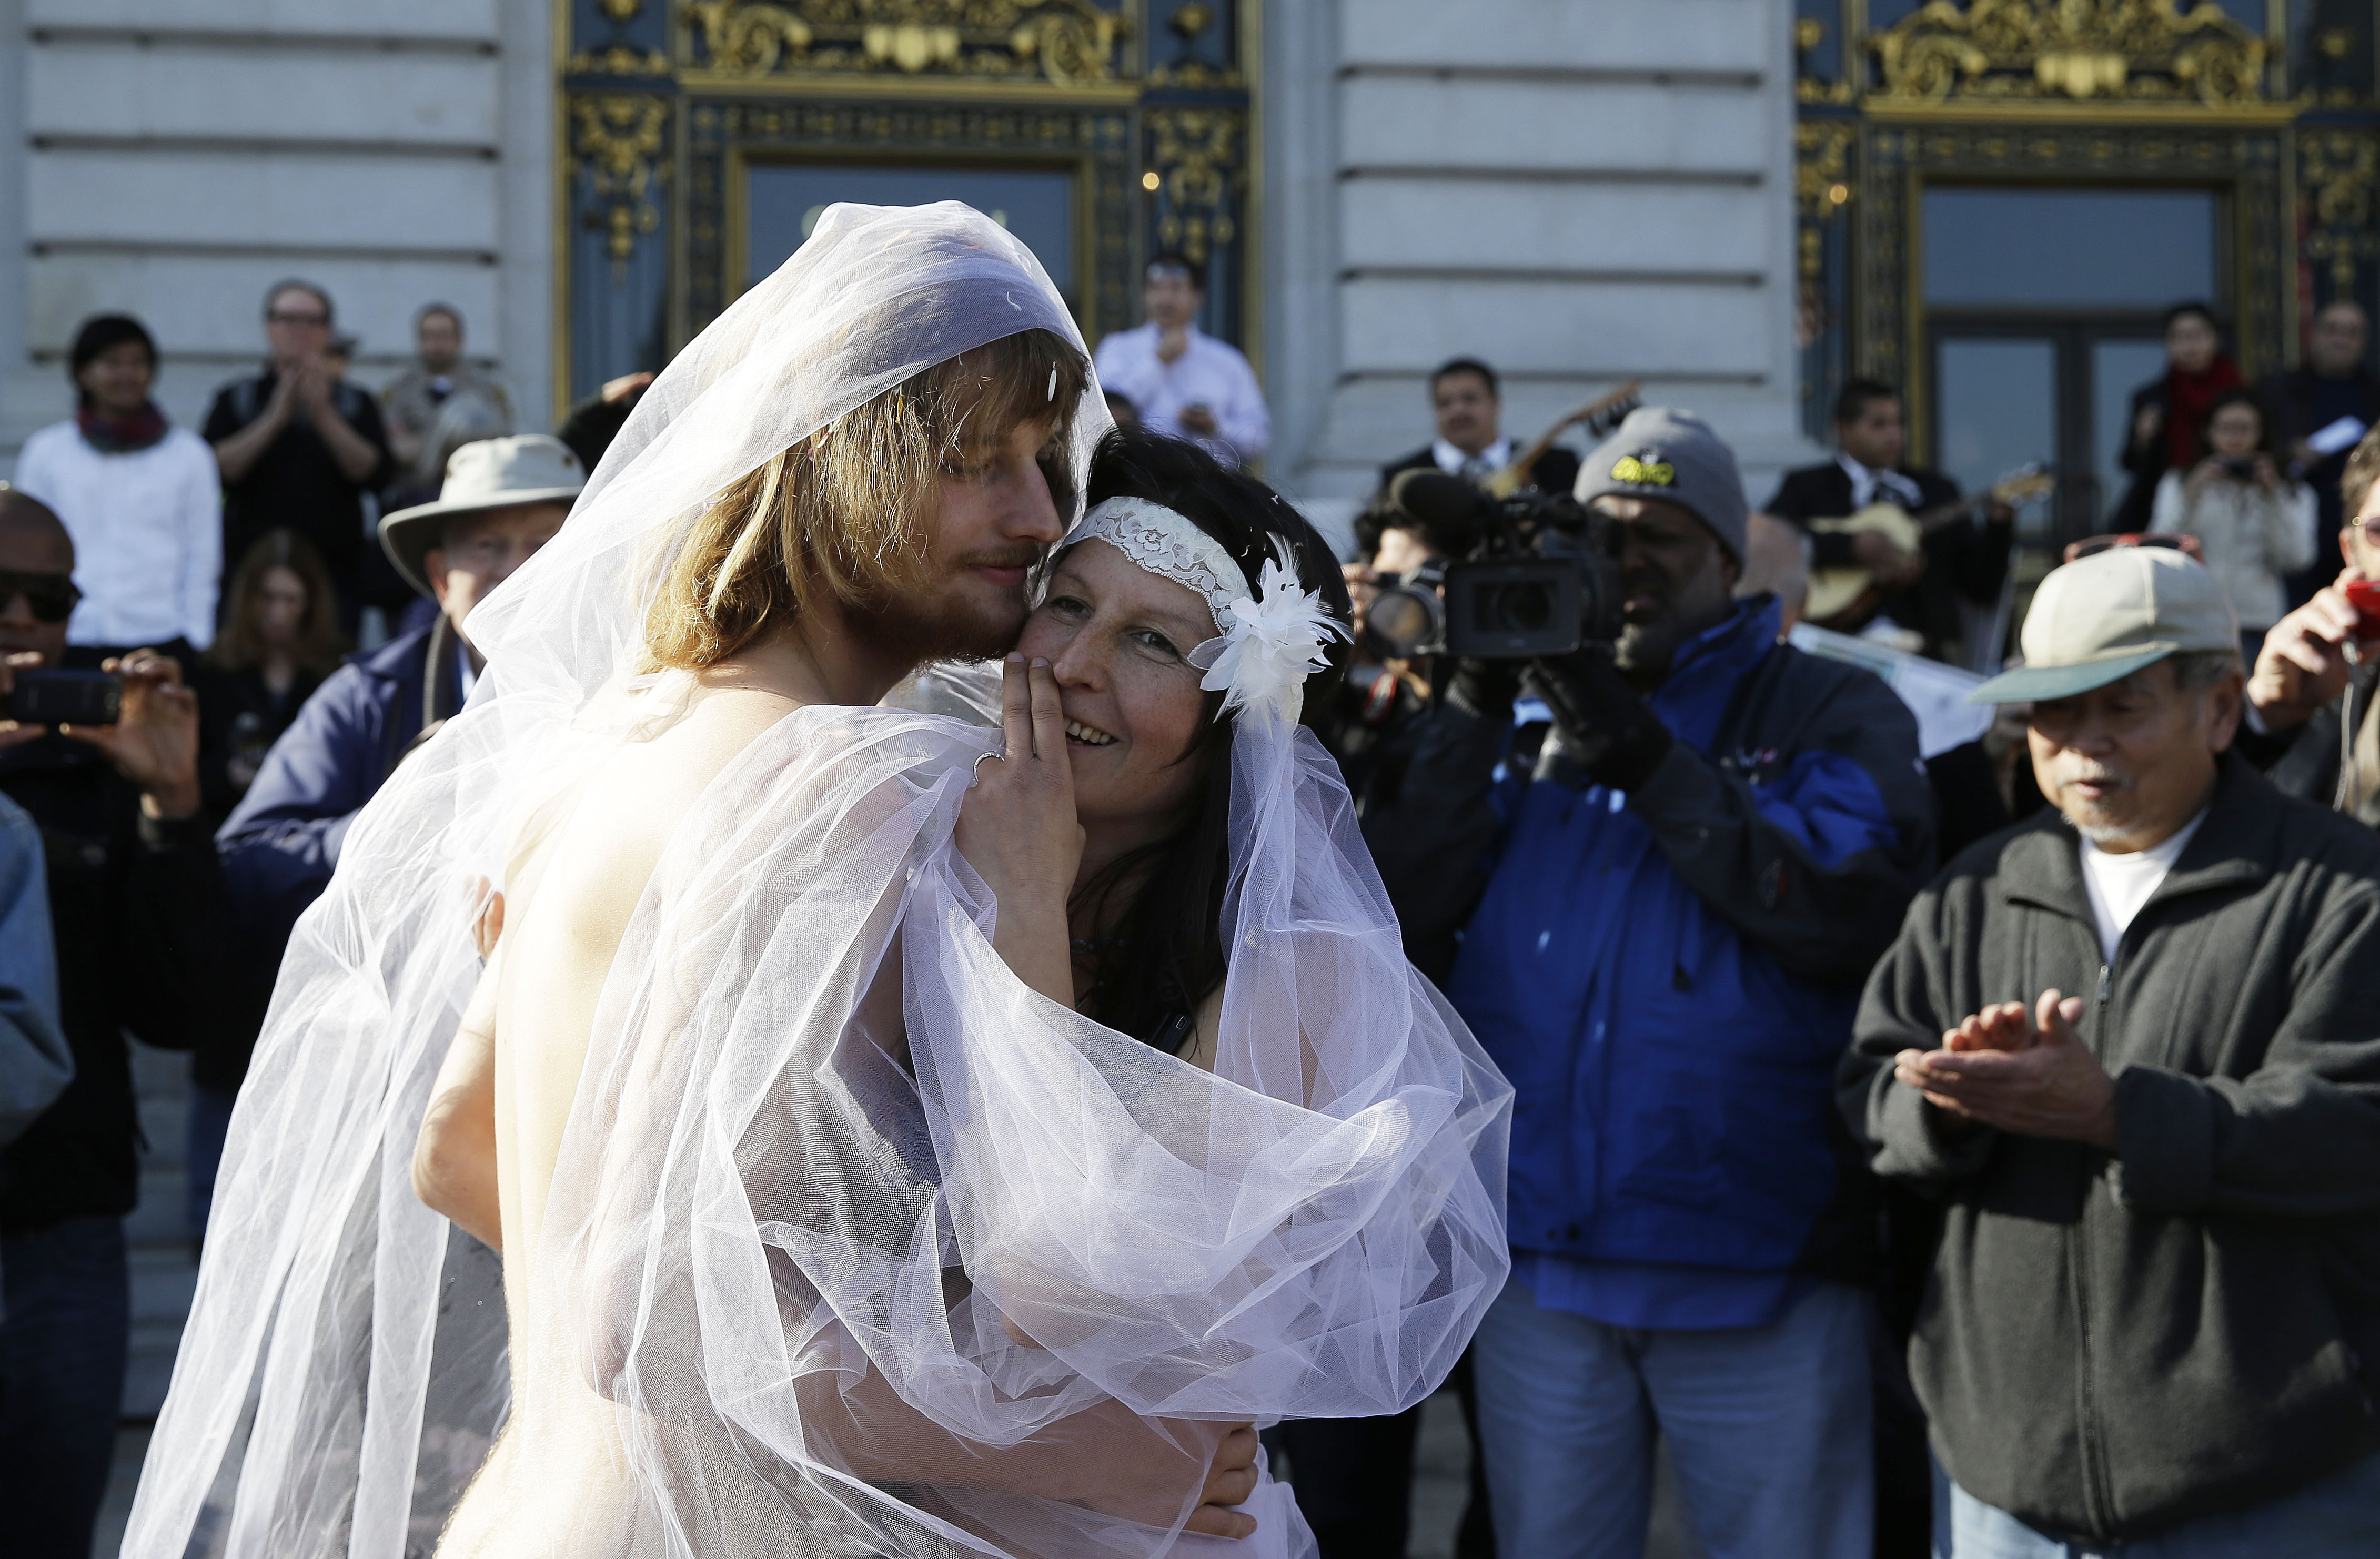 Naked Wedding At San Francisco City Hall Ends In Arrest 